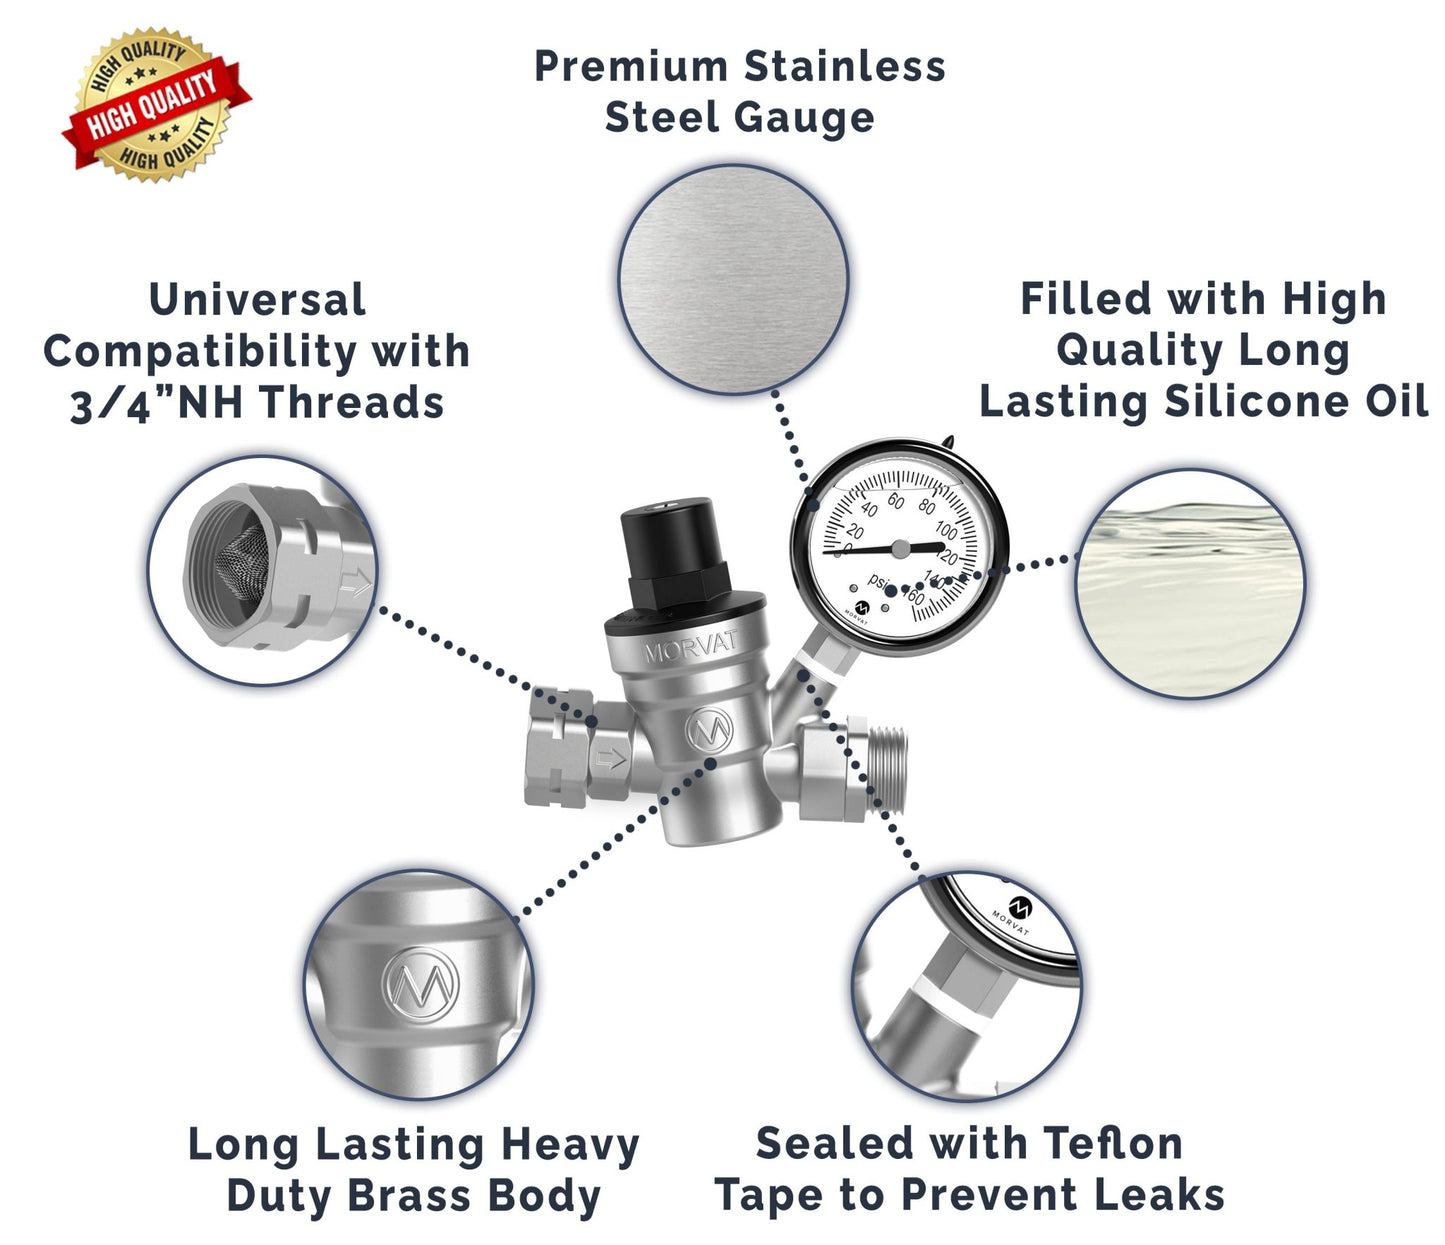 
                  
                    Adjustable Lead-Free Brass RV Water Pressure Regulator with Oil Filled Gauge
                  
                